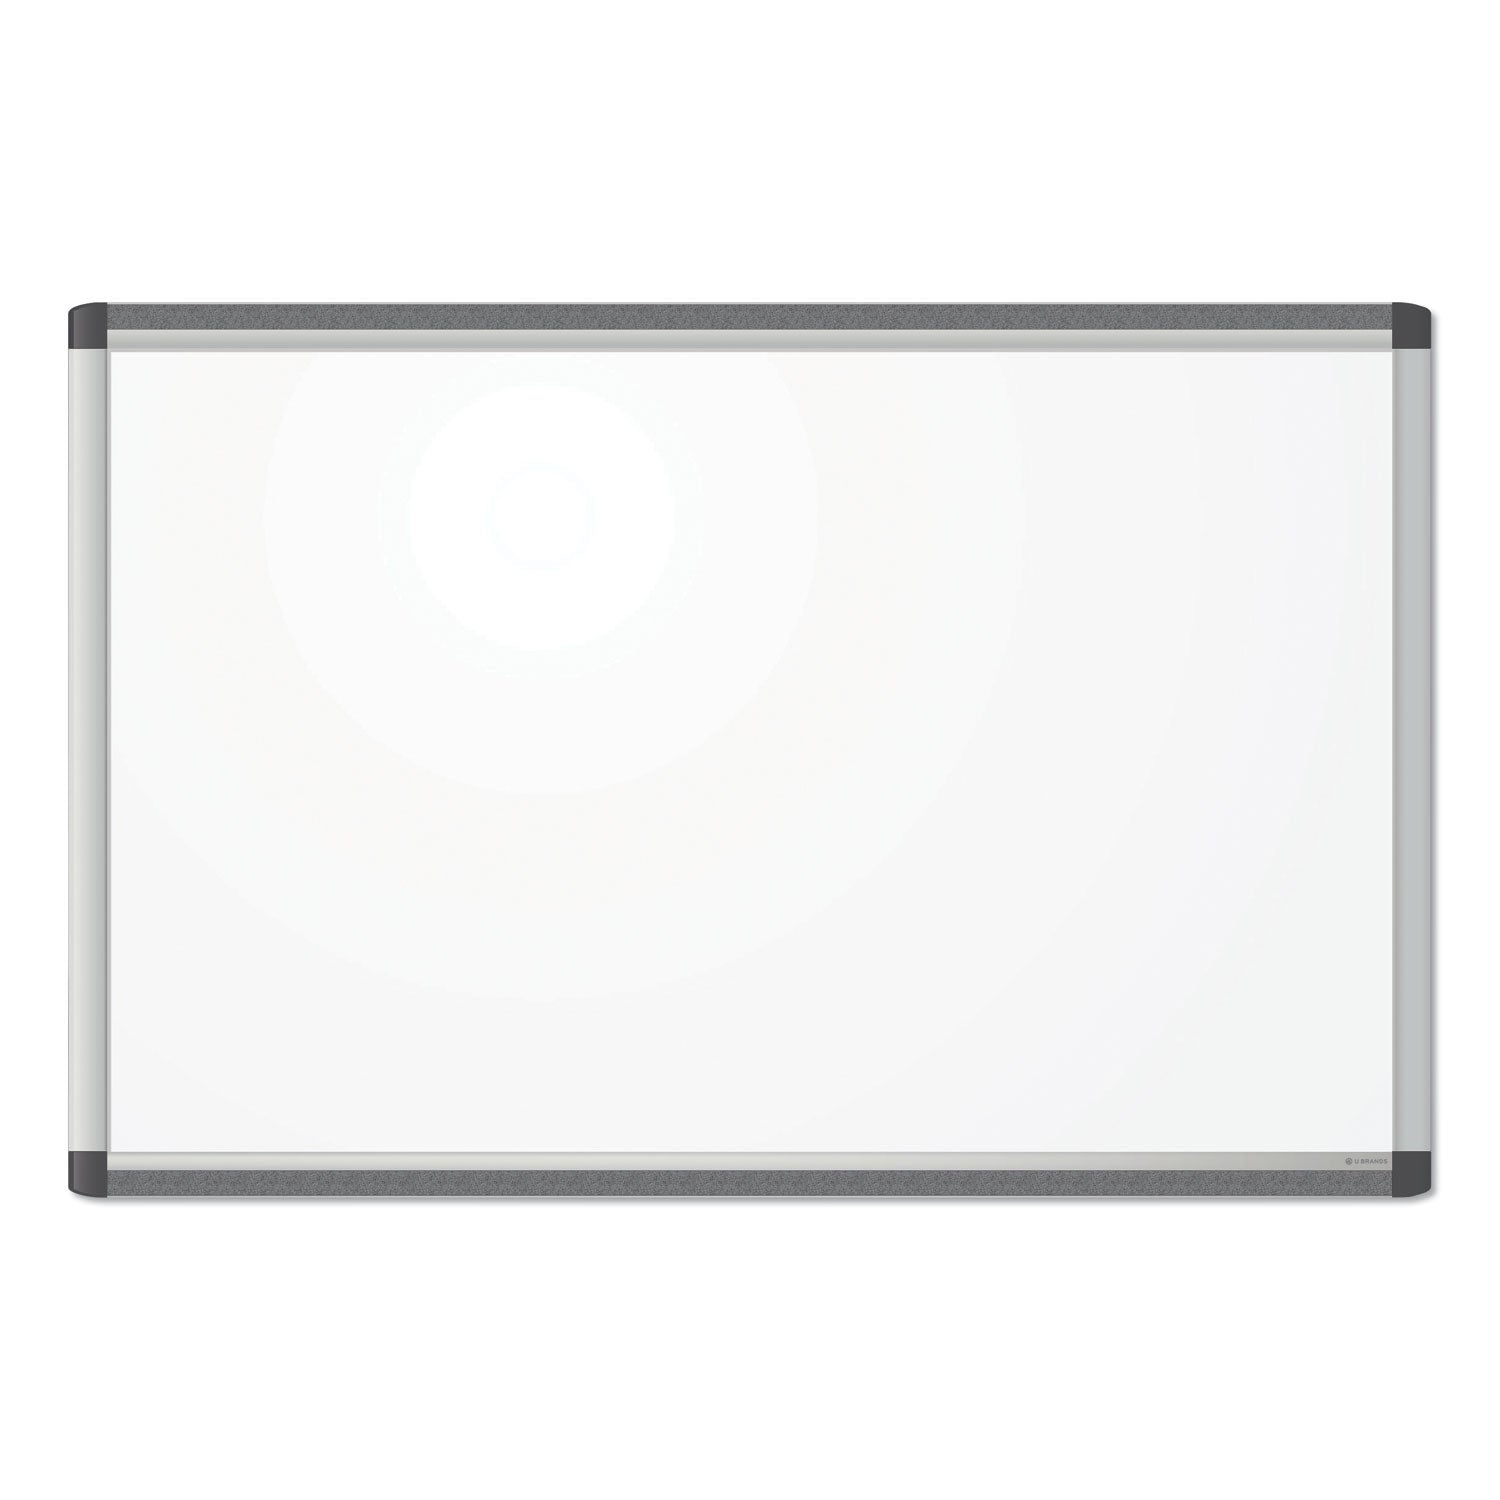 pinit-magnetic-dry-erase-board-35-x-23-white_ubr2805u0001 - 1